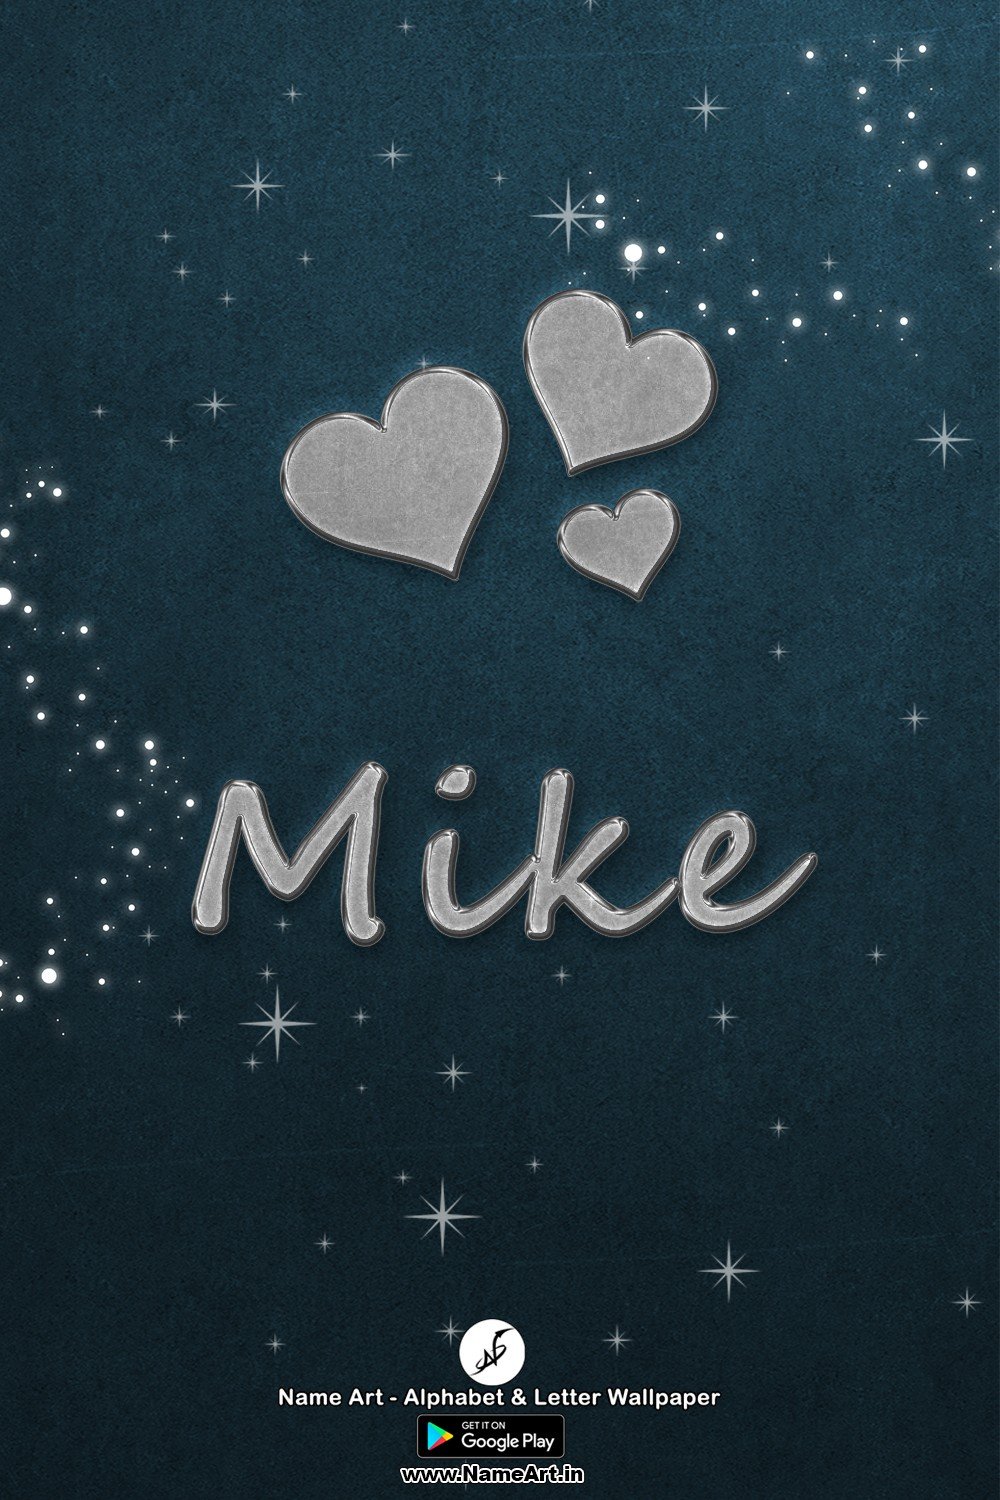 Mike | Whatsapp Status Mike | Happy Birthday Mike !! | New Whatsapp Status Mike Images |